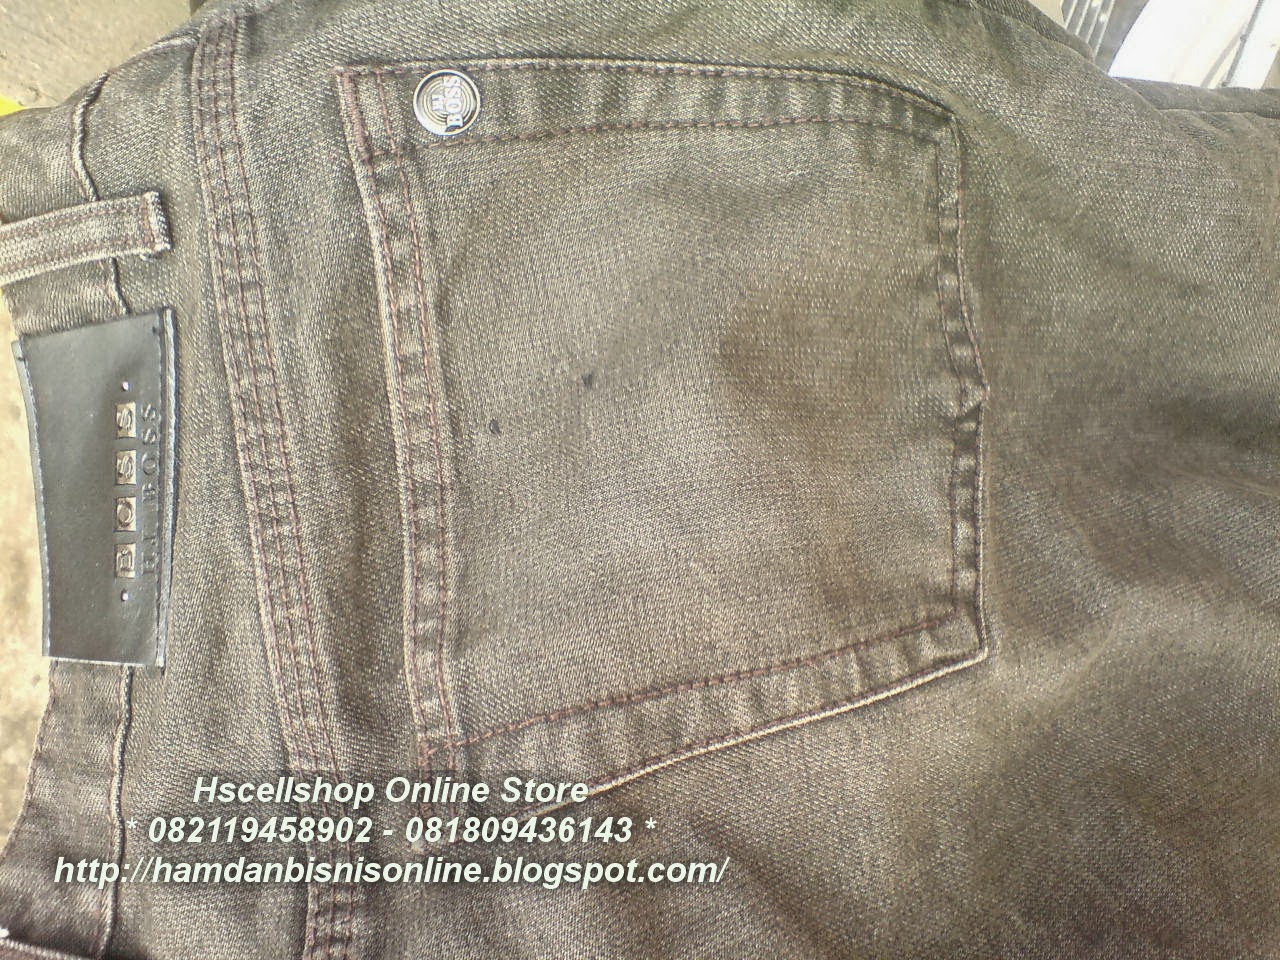  Celana  Jeans Hugo  Boss Asli Original Code CL008 hscellshop